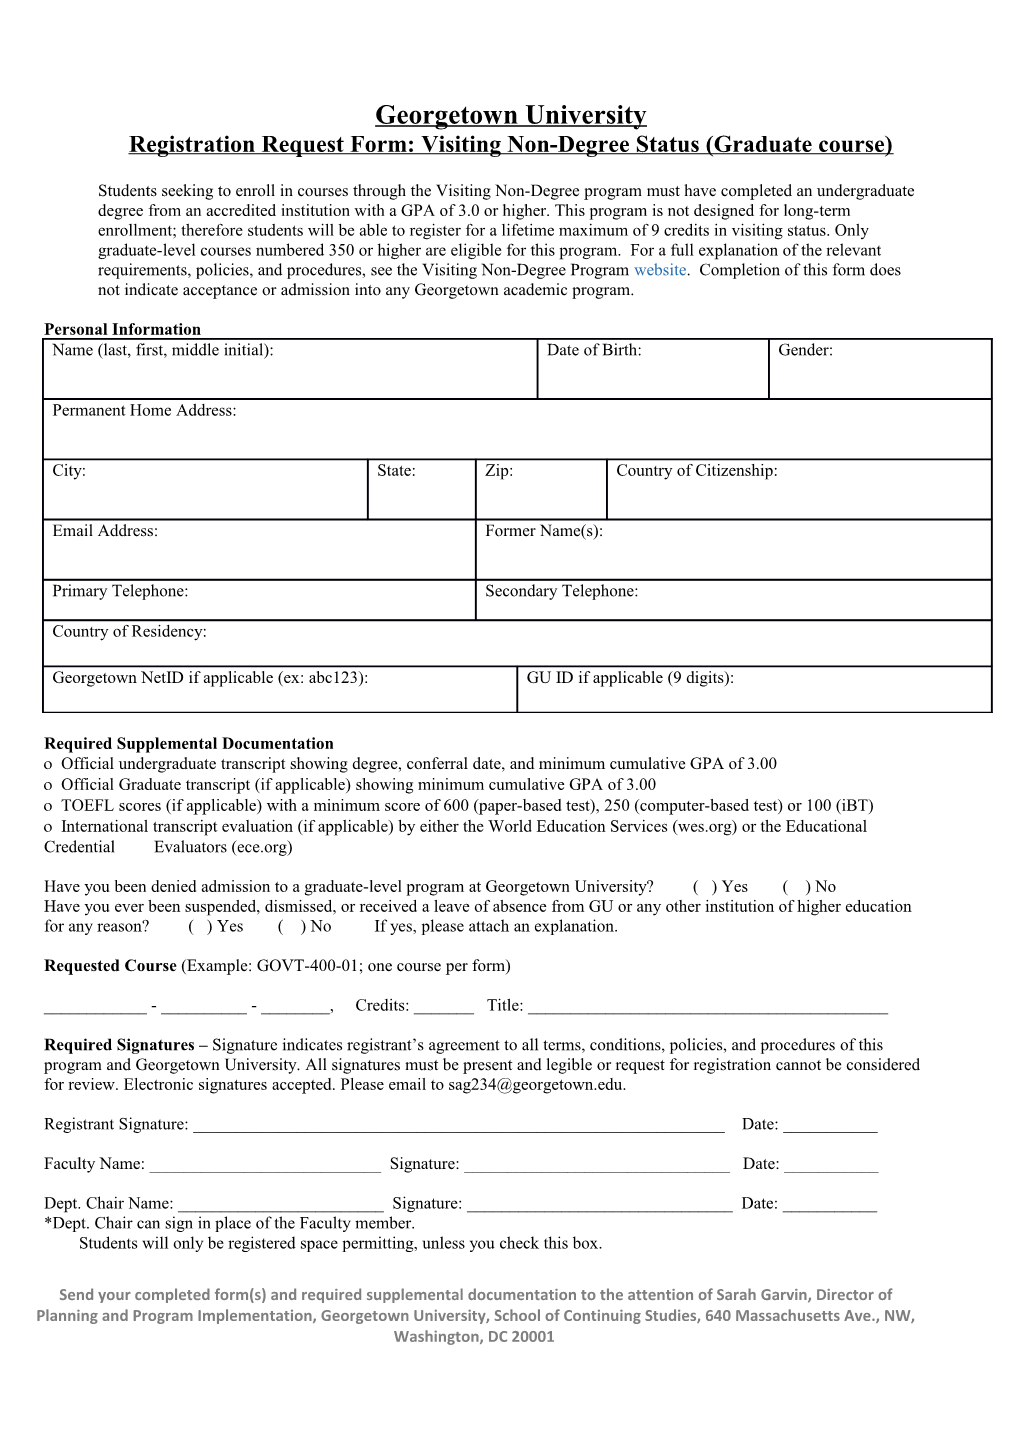 Registration Request Form: Visiting Non-Degree Status (Graduate Course)